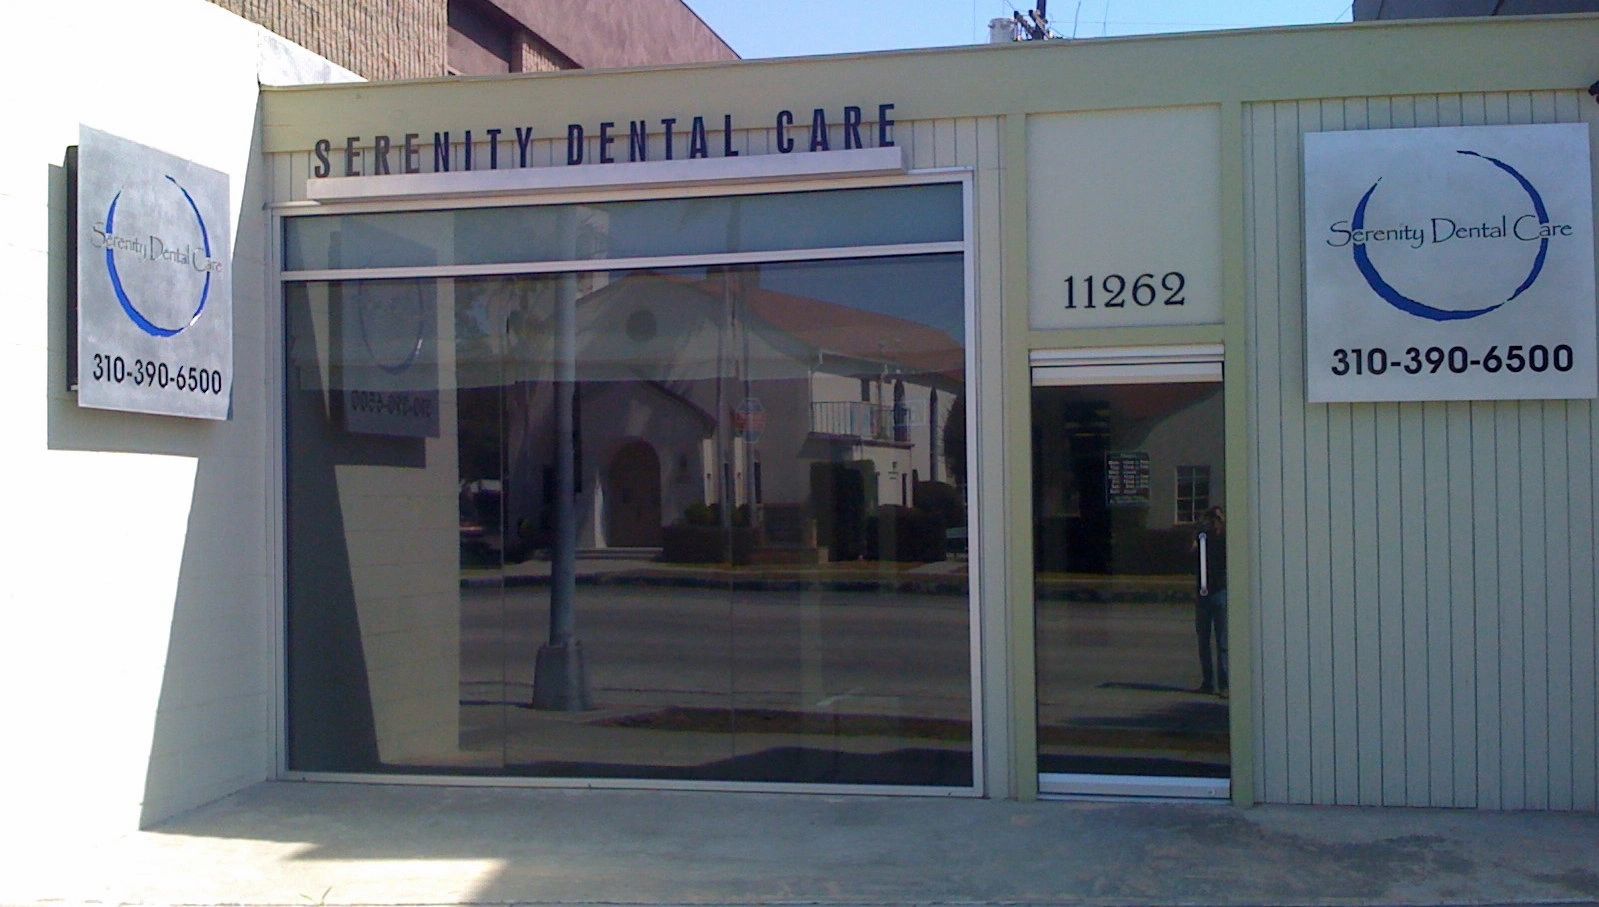 Culver City Dentist - Serenity Dental Care, Culver City CA 90230